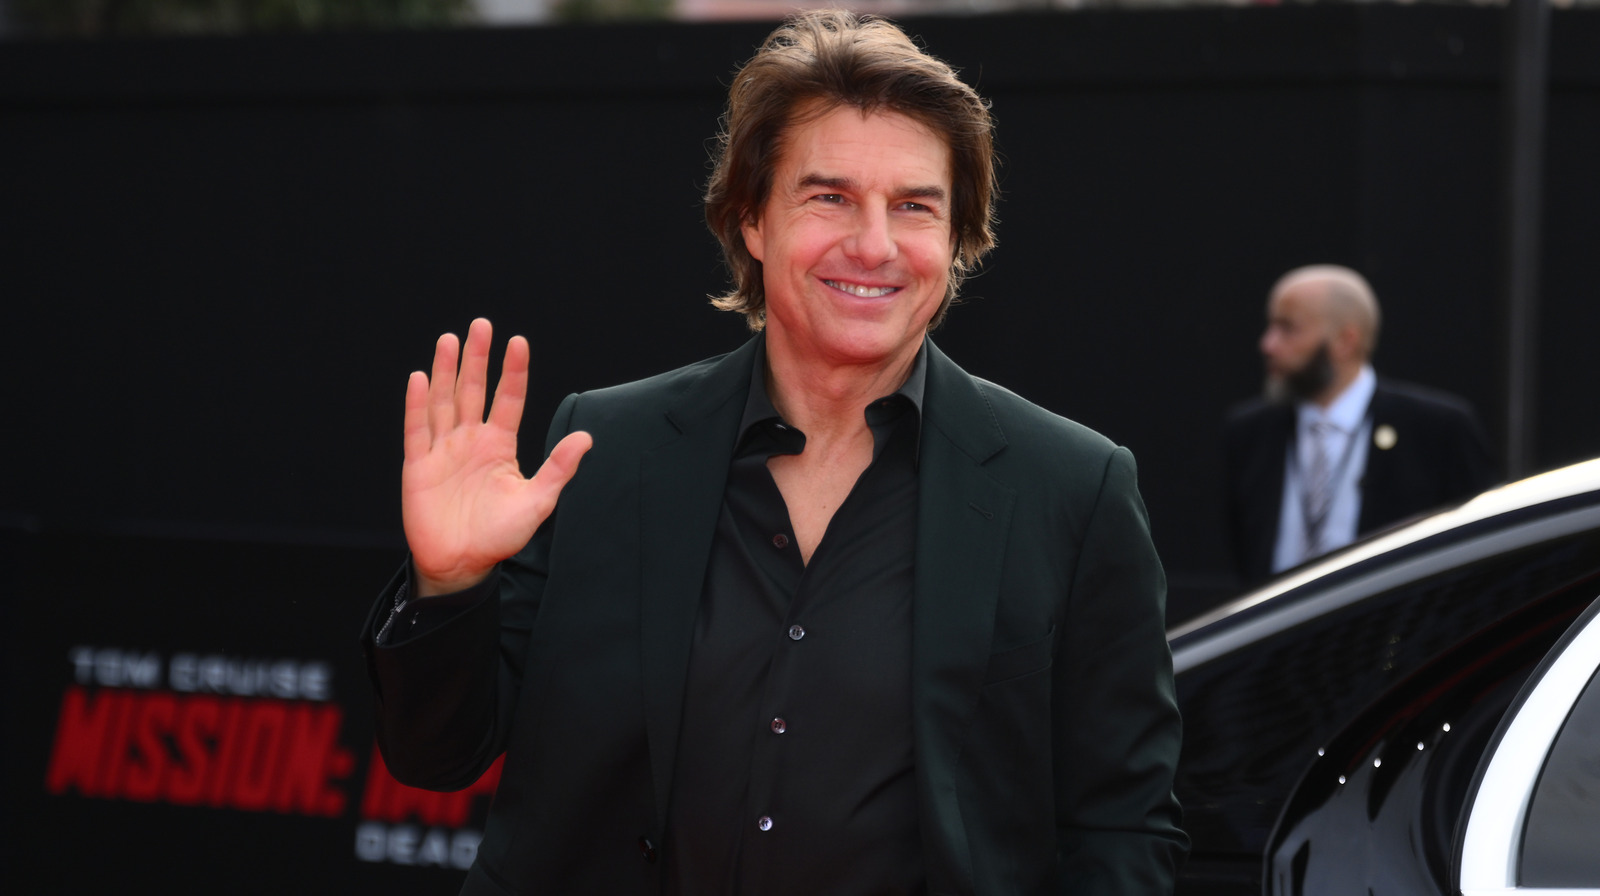 Tom Cruise debunks 'weirdest story' he's ever heard about himself